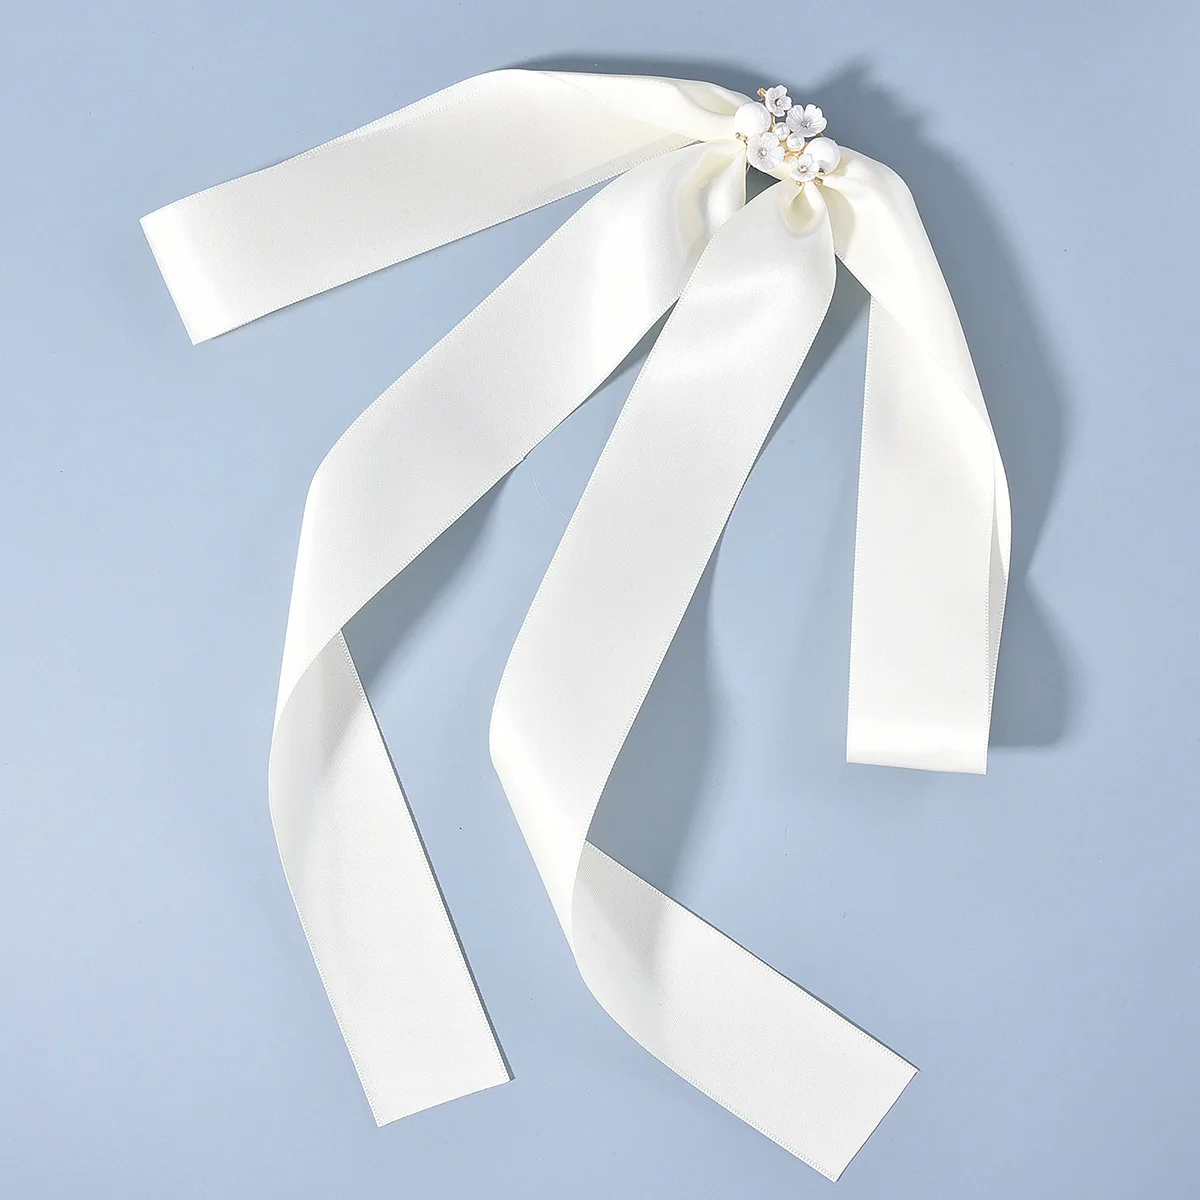 

Jachon Simple white satin bow tiara bridal veil wedding dress accessories, As picture